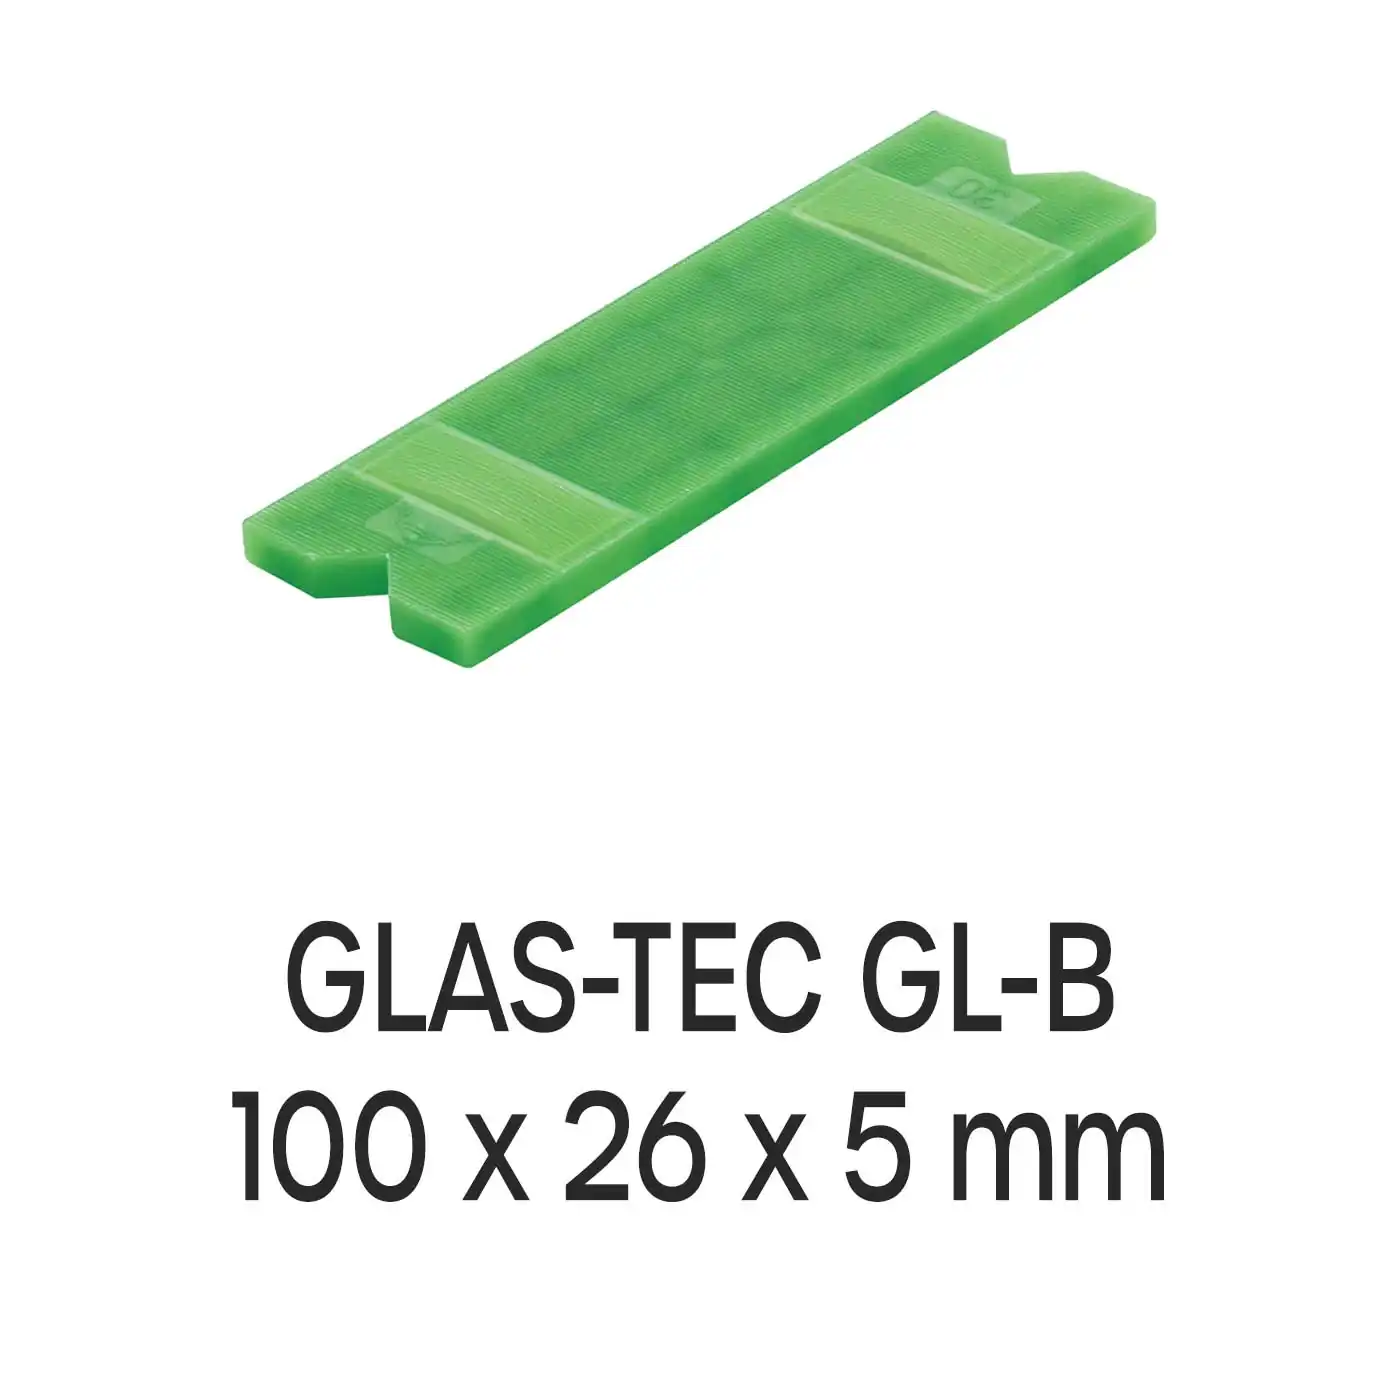 Roto GLAS-TEC GL-B 100 x 26 x 5 mm Verglasungsklötze 1000 Stück